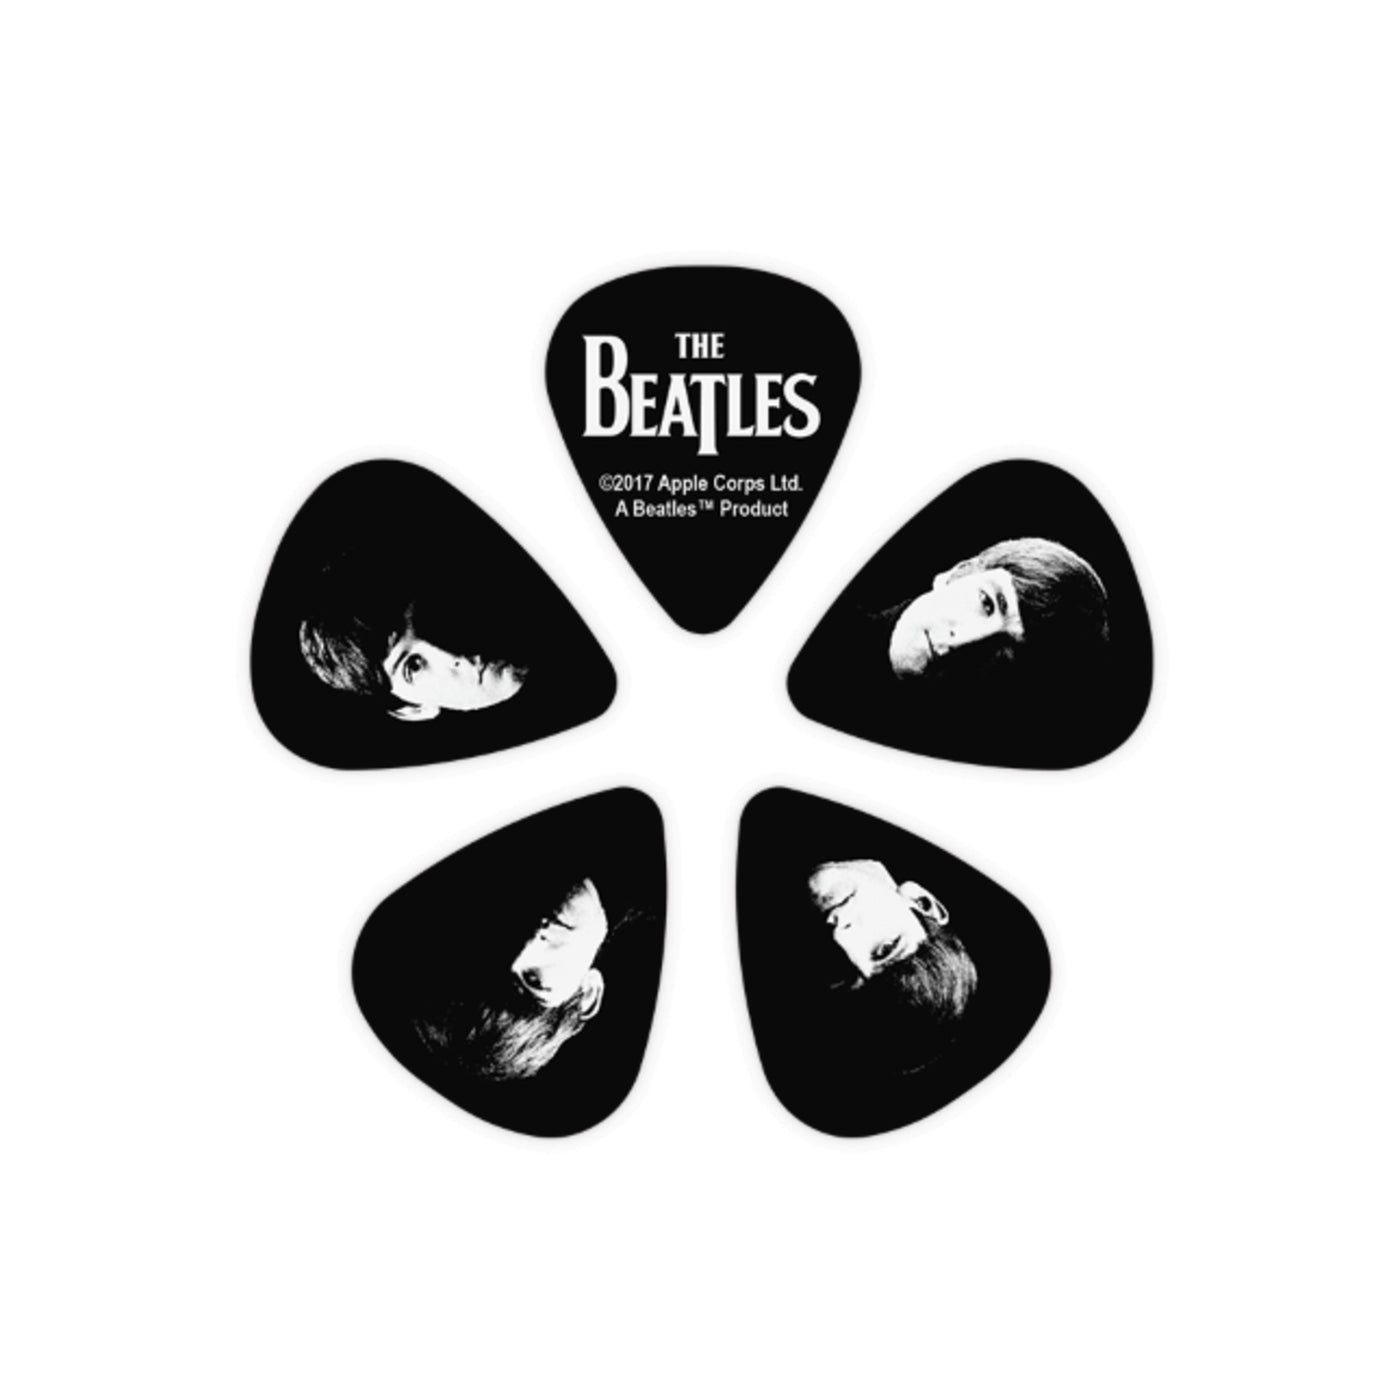 D'Addario Beatles Guitar Picks, Meet The Beatles, 10 Pack, Heavy (1CBK6-10B2)